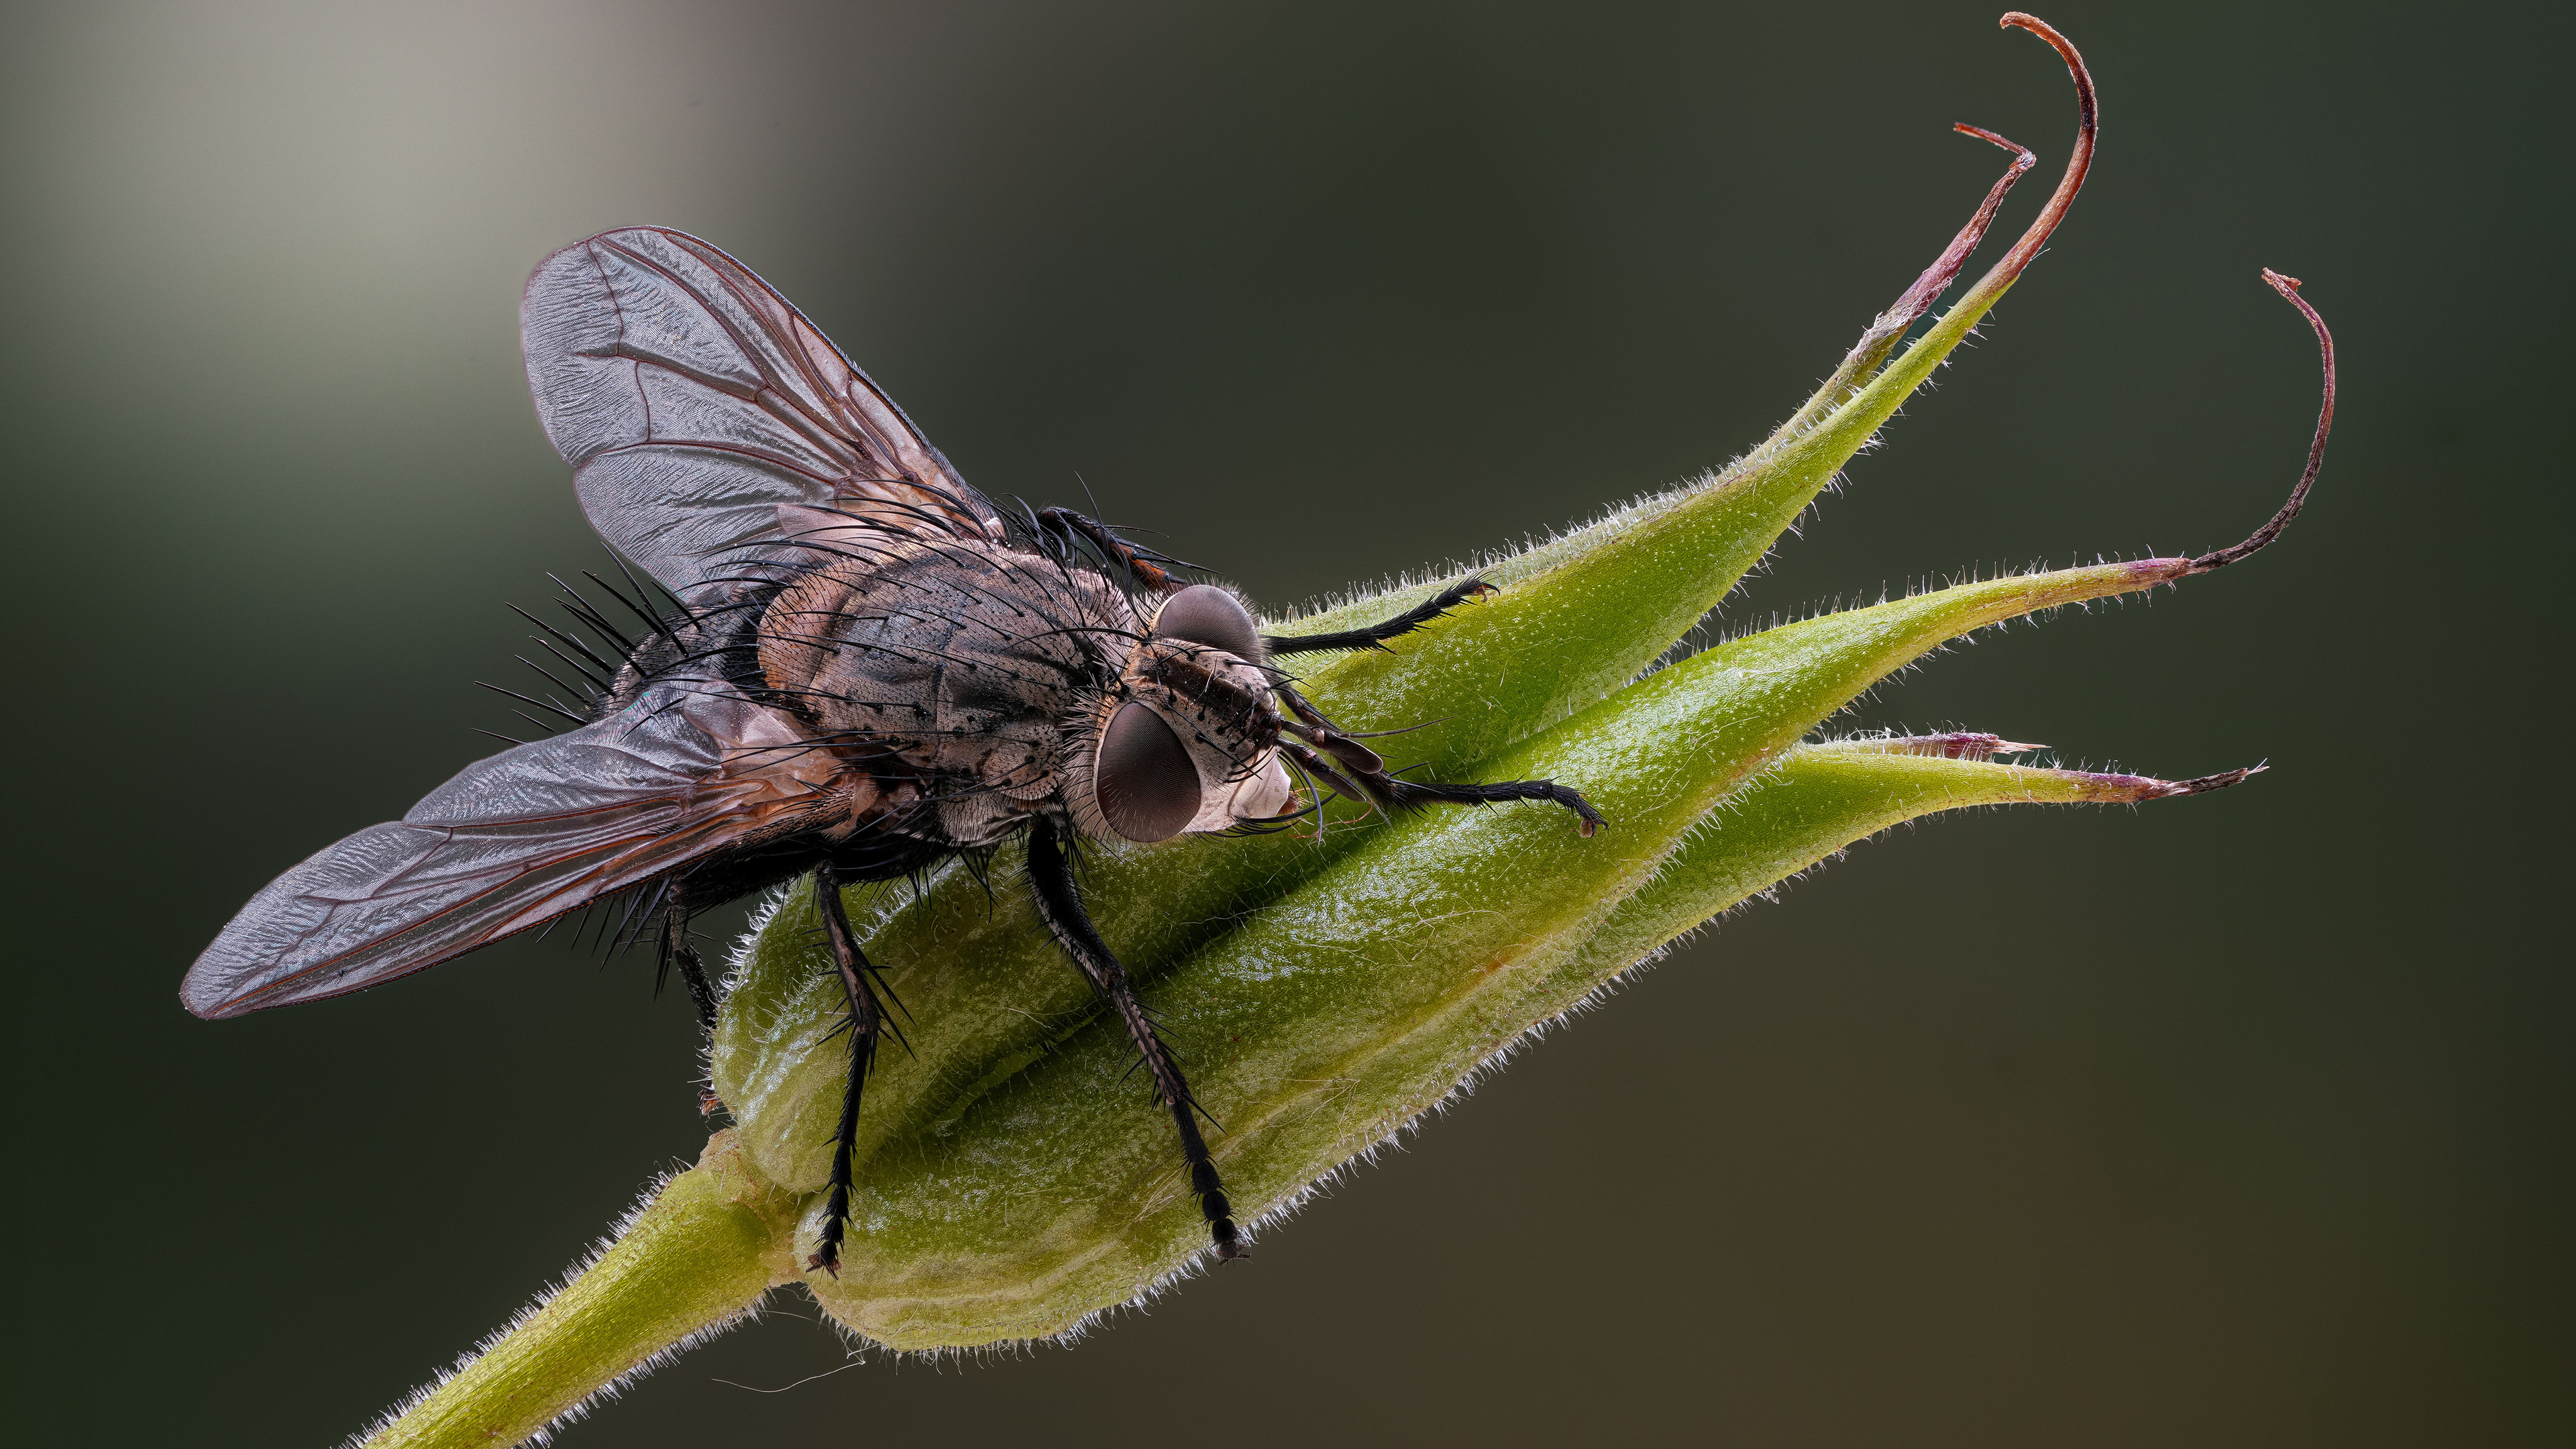 Tachinid fly on a flower bud